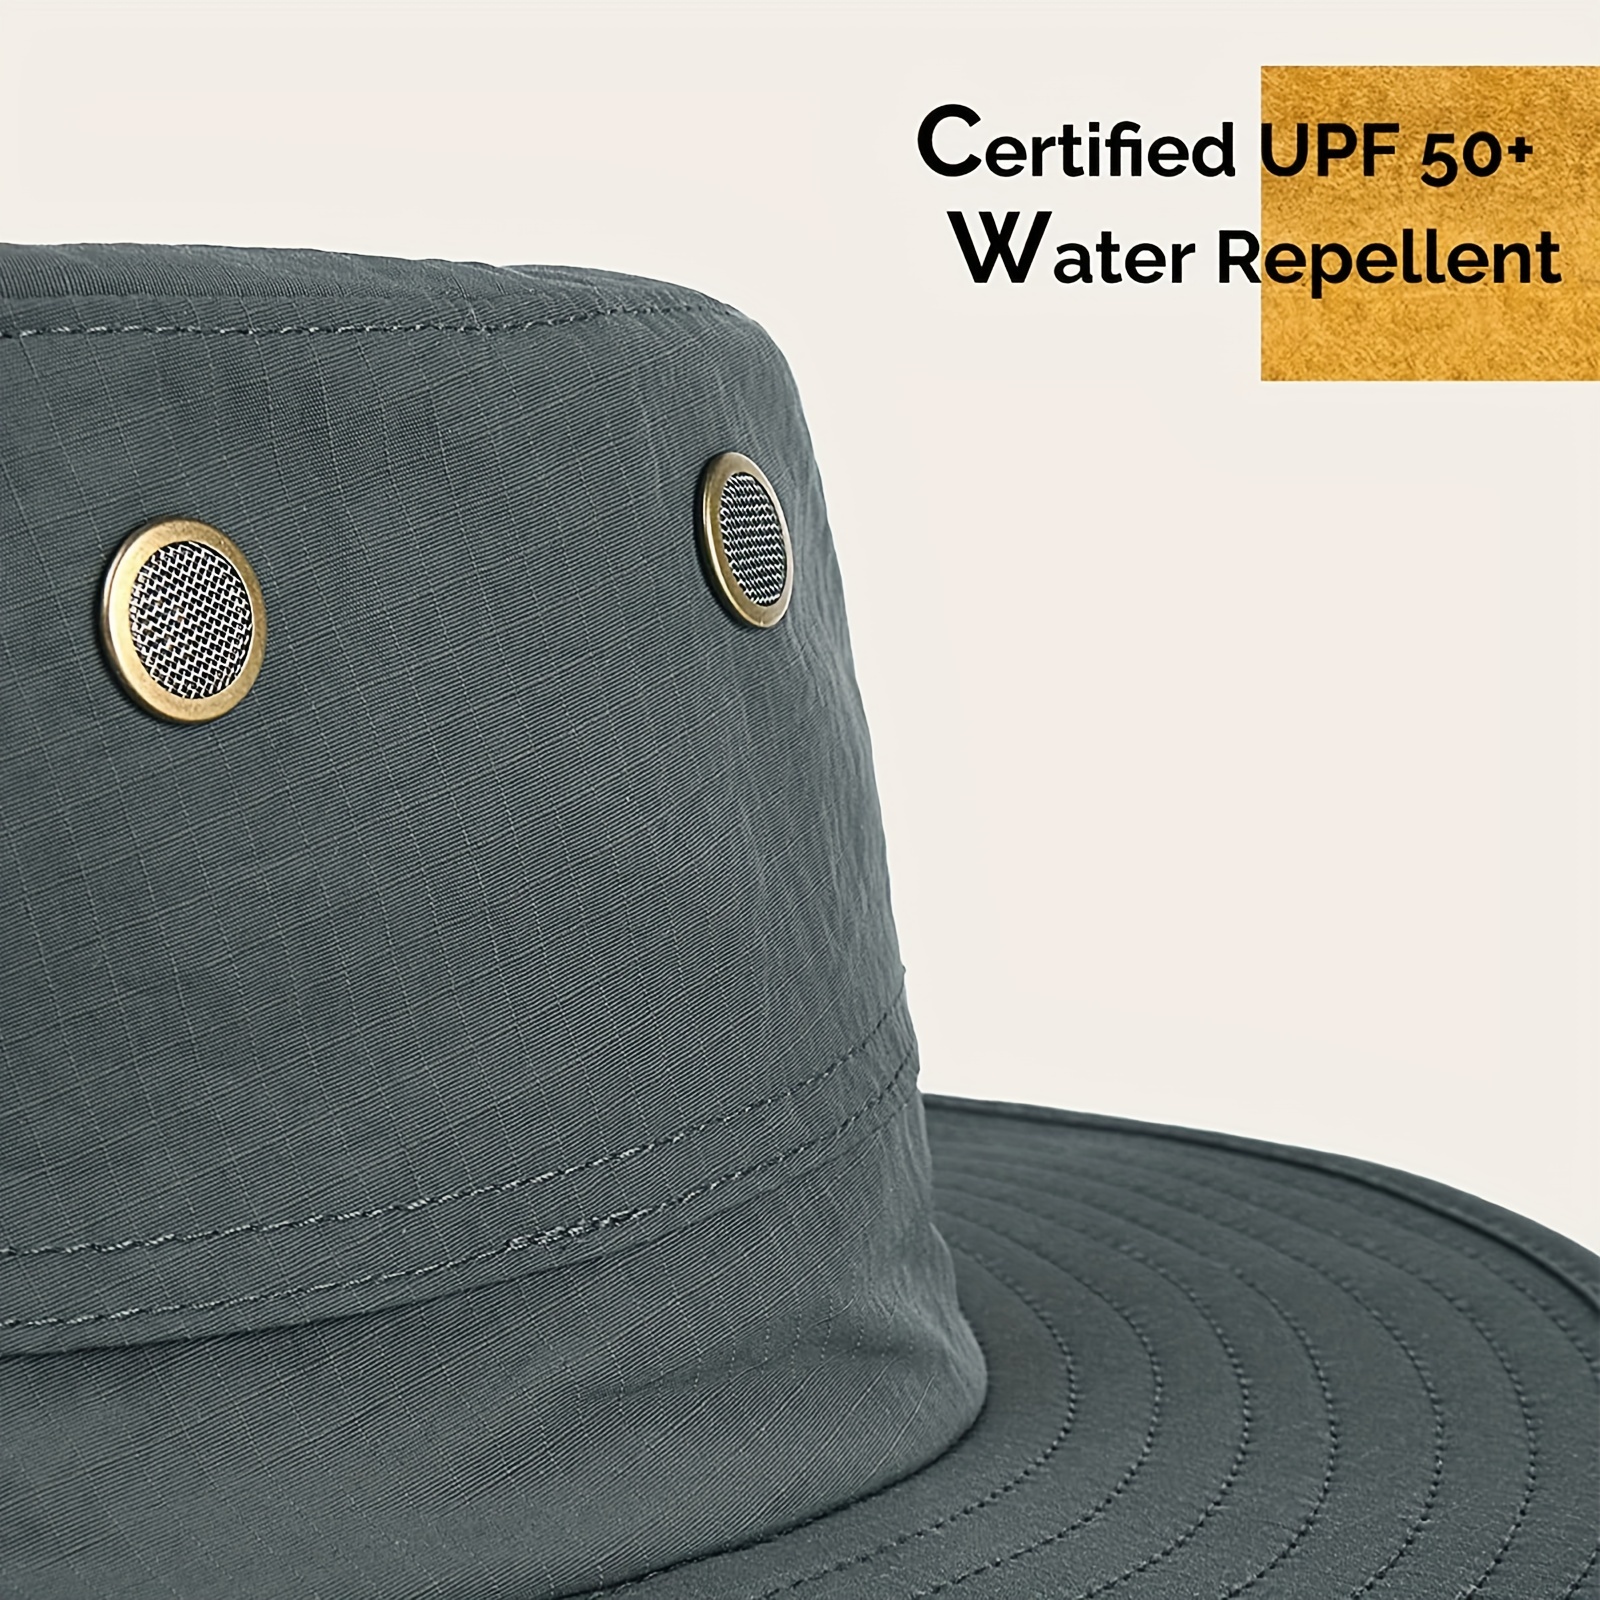  Upf 50 Hat